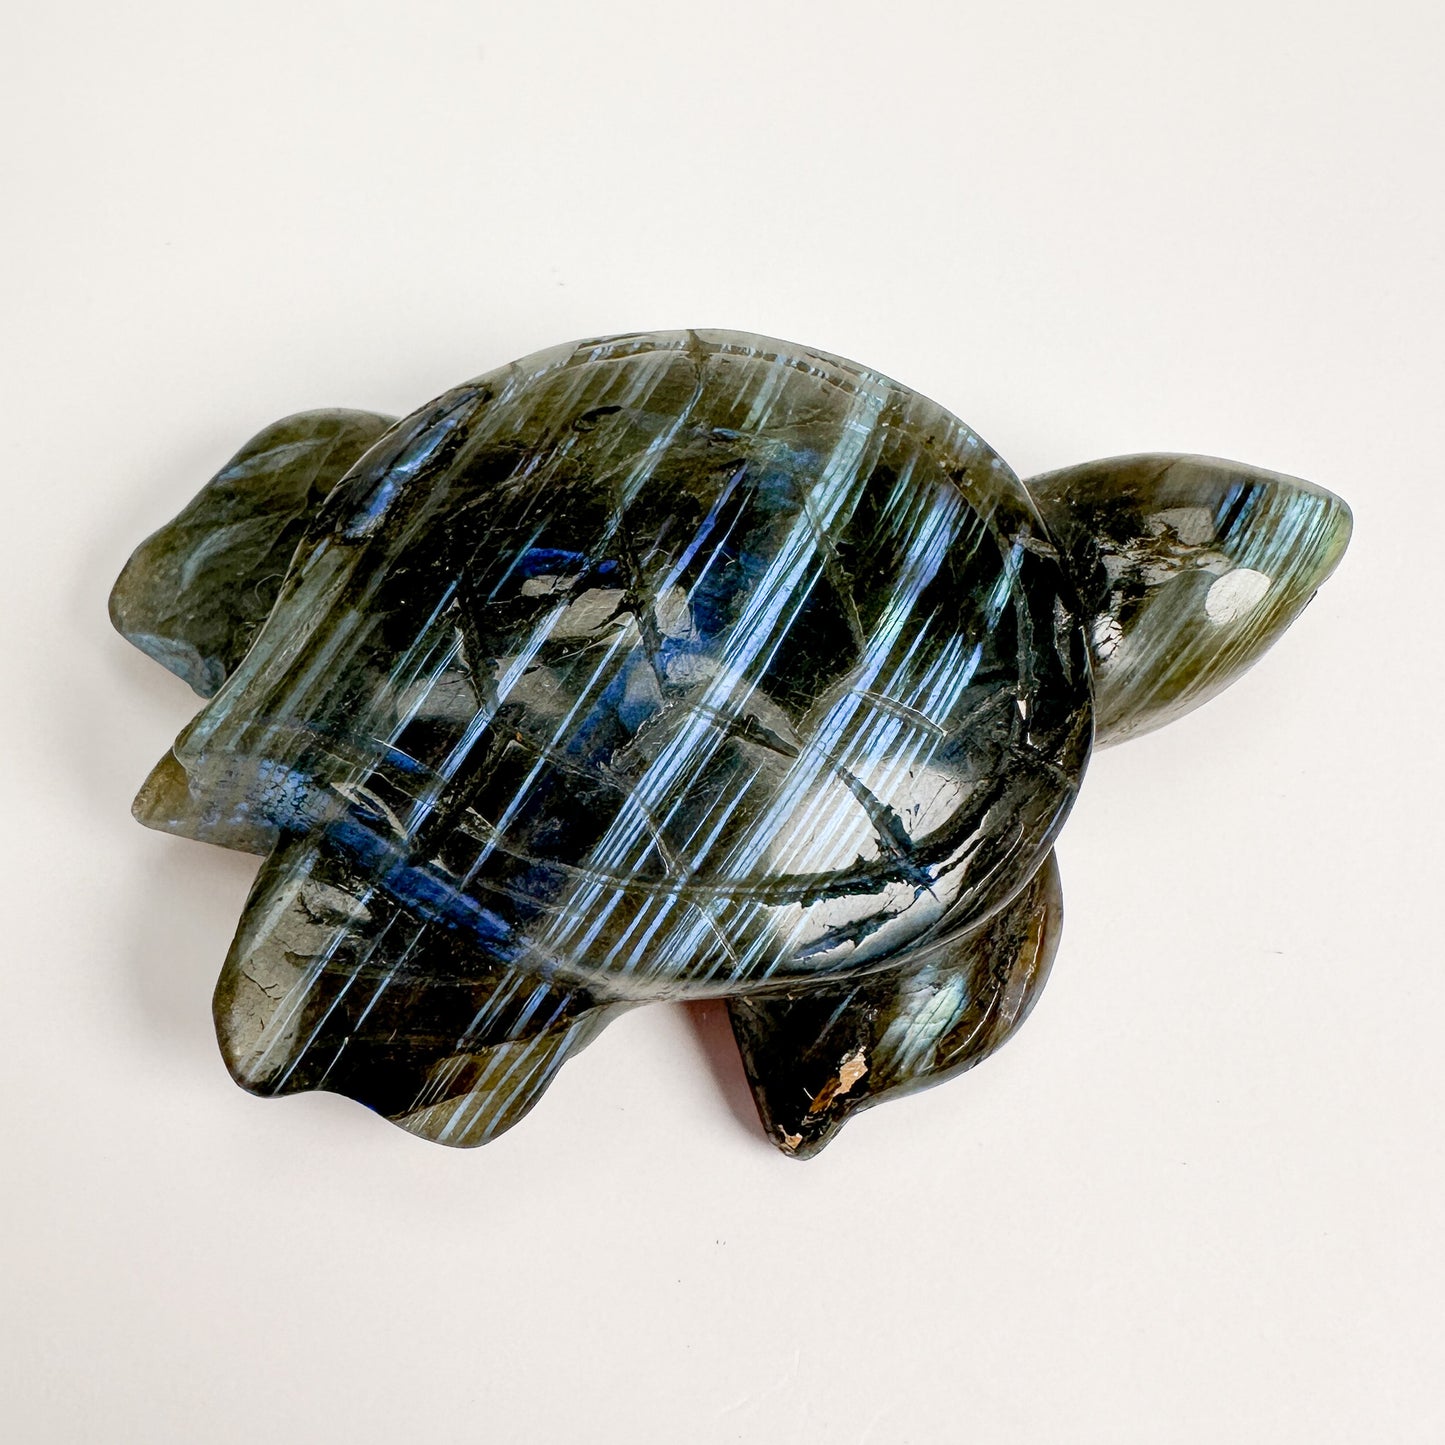 Labradorite Carved Turtle Specimen - 1 pc.-The Bead Gallery Honolulu